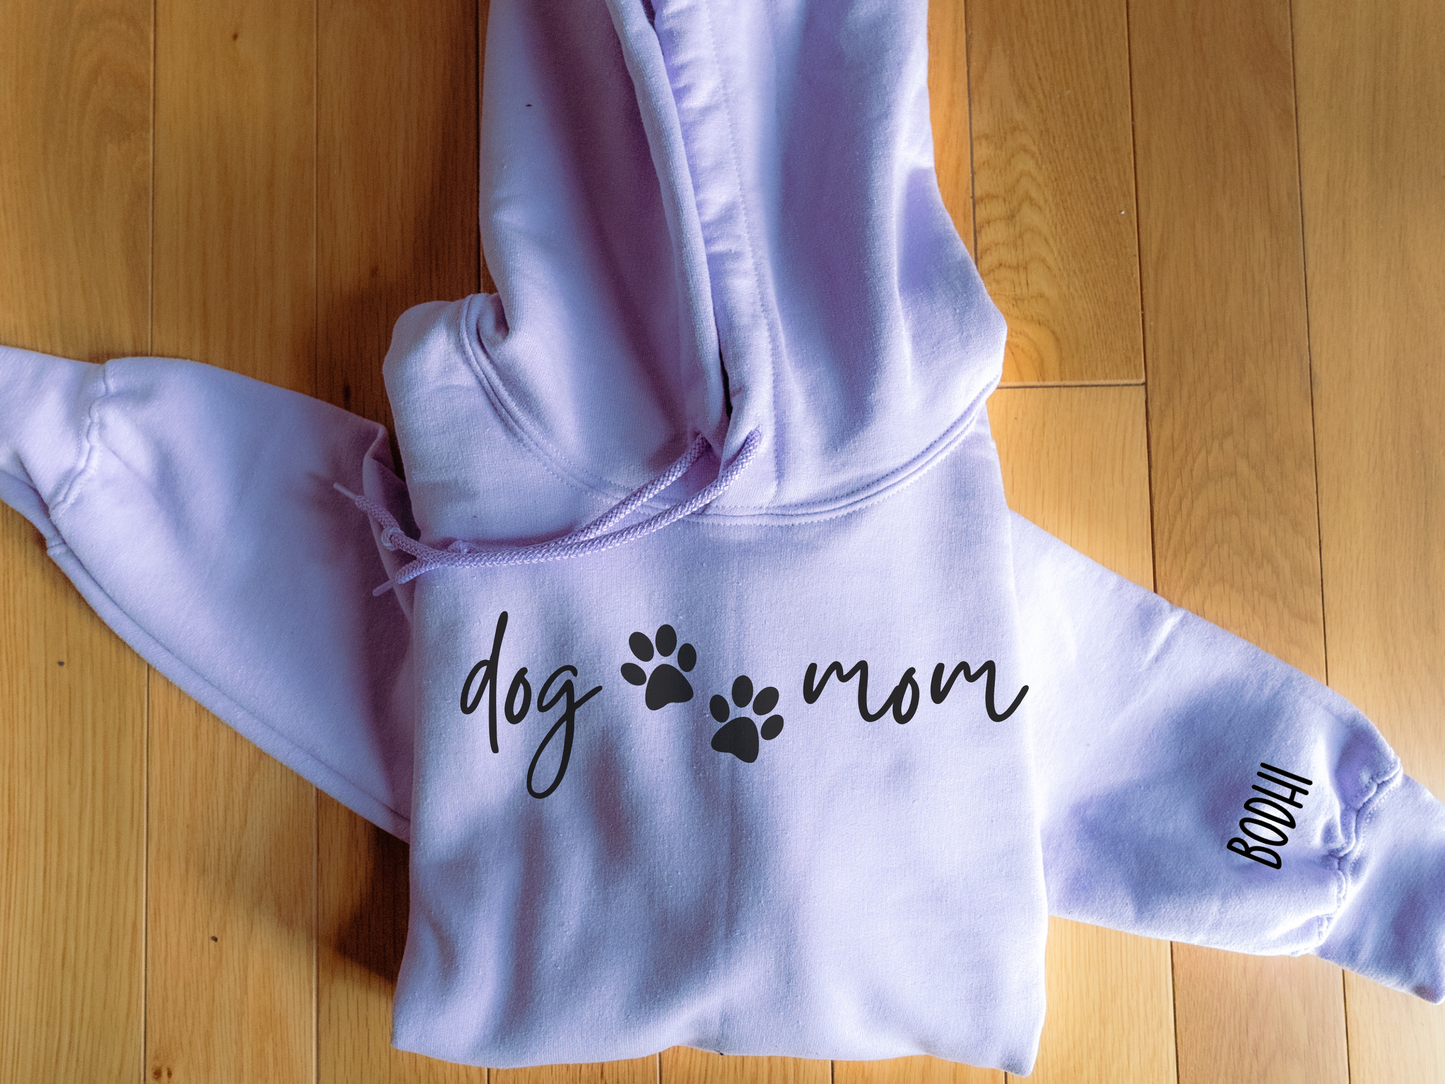 Dog mom sweatshirt, personalized sweatshirt for dog moms, custom dog mom sweatshirt, dog mom apparel, gifts for dog moms, apparel for dog moms